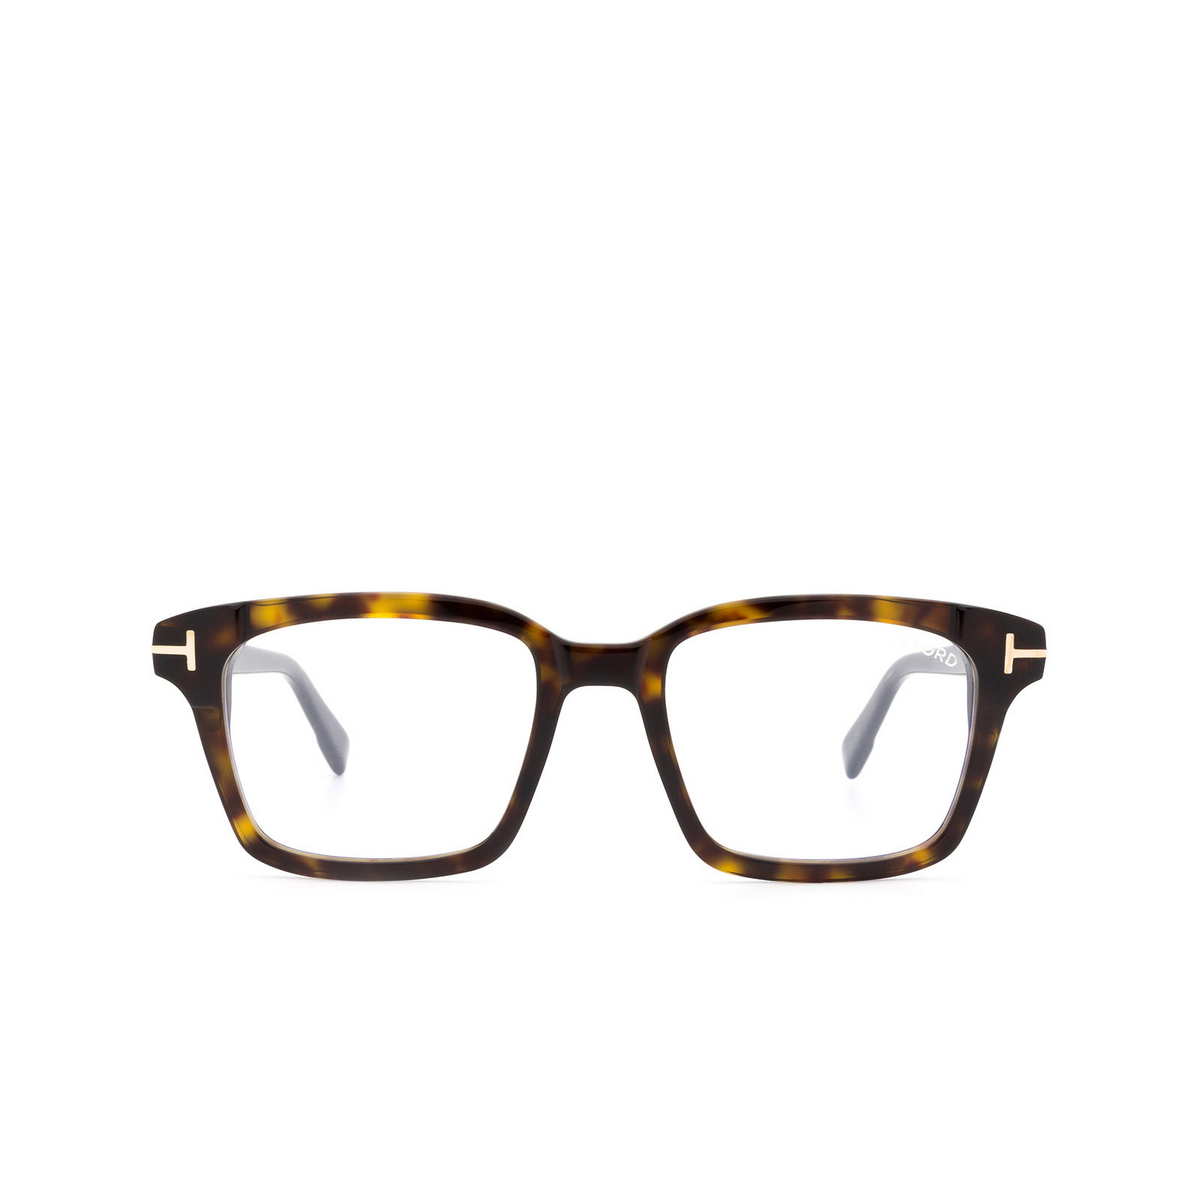 Tom Ford® Square Eyeglasses: FT5661-B color Dark Havana 052 - front view.